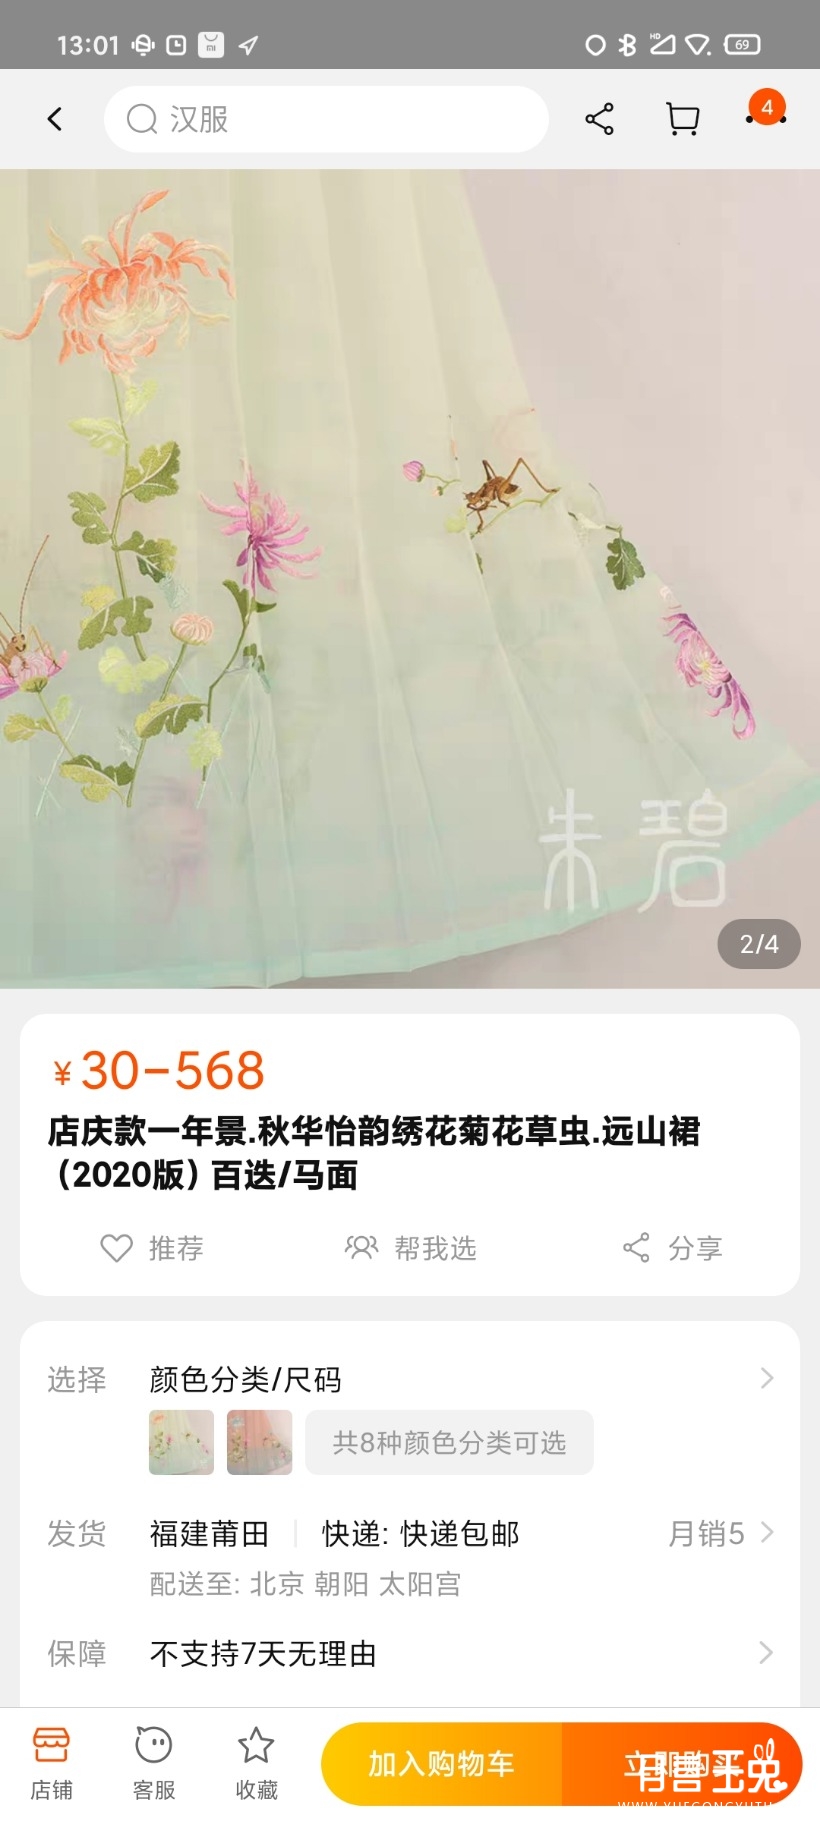 Screenshot_2021-03-31-13-01-48-342_com.taobao.taobao.jpg